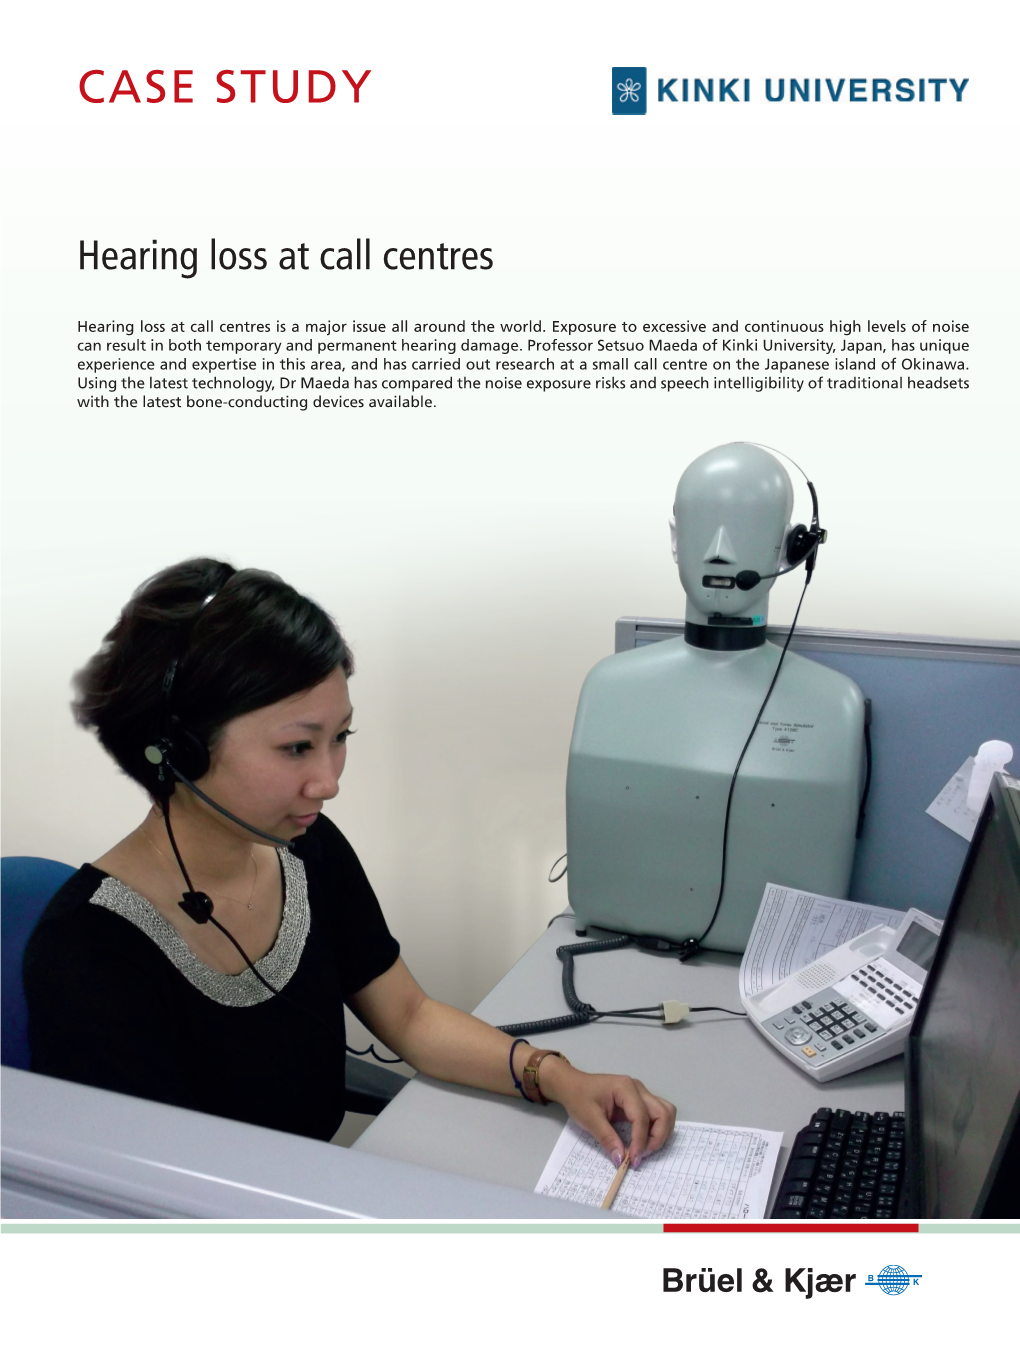 Case Study: Kinki University, Hearing Loss at Call Centres (Bn1288)